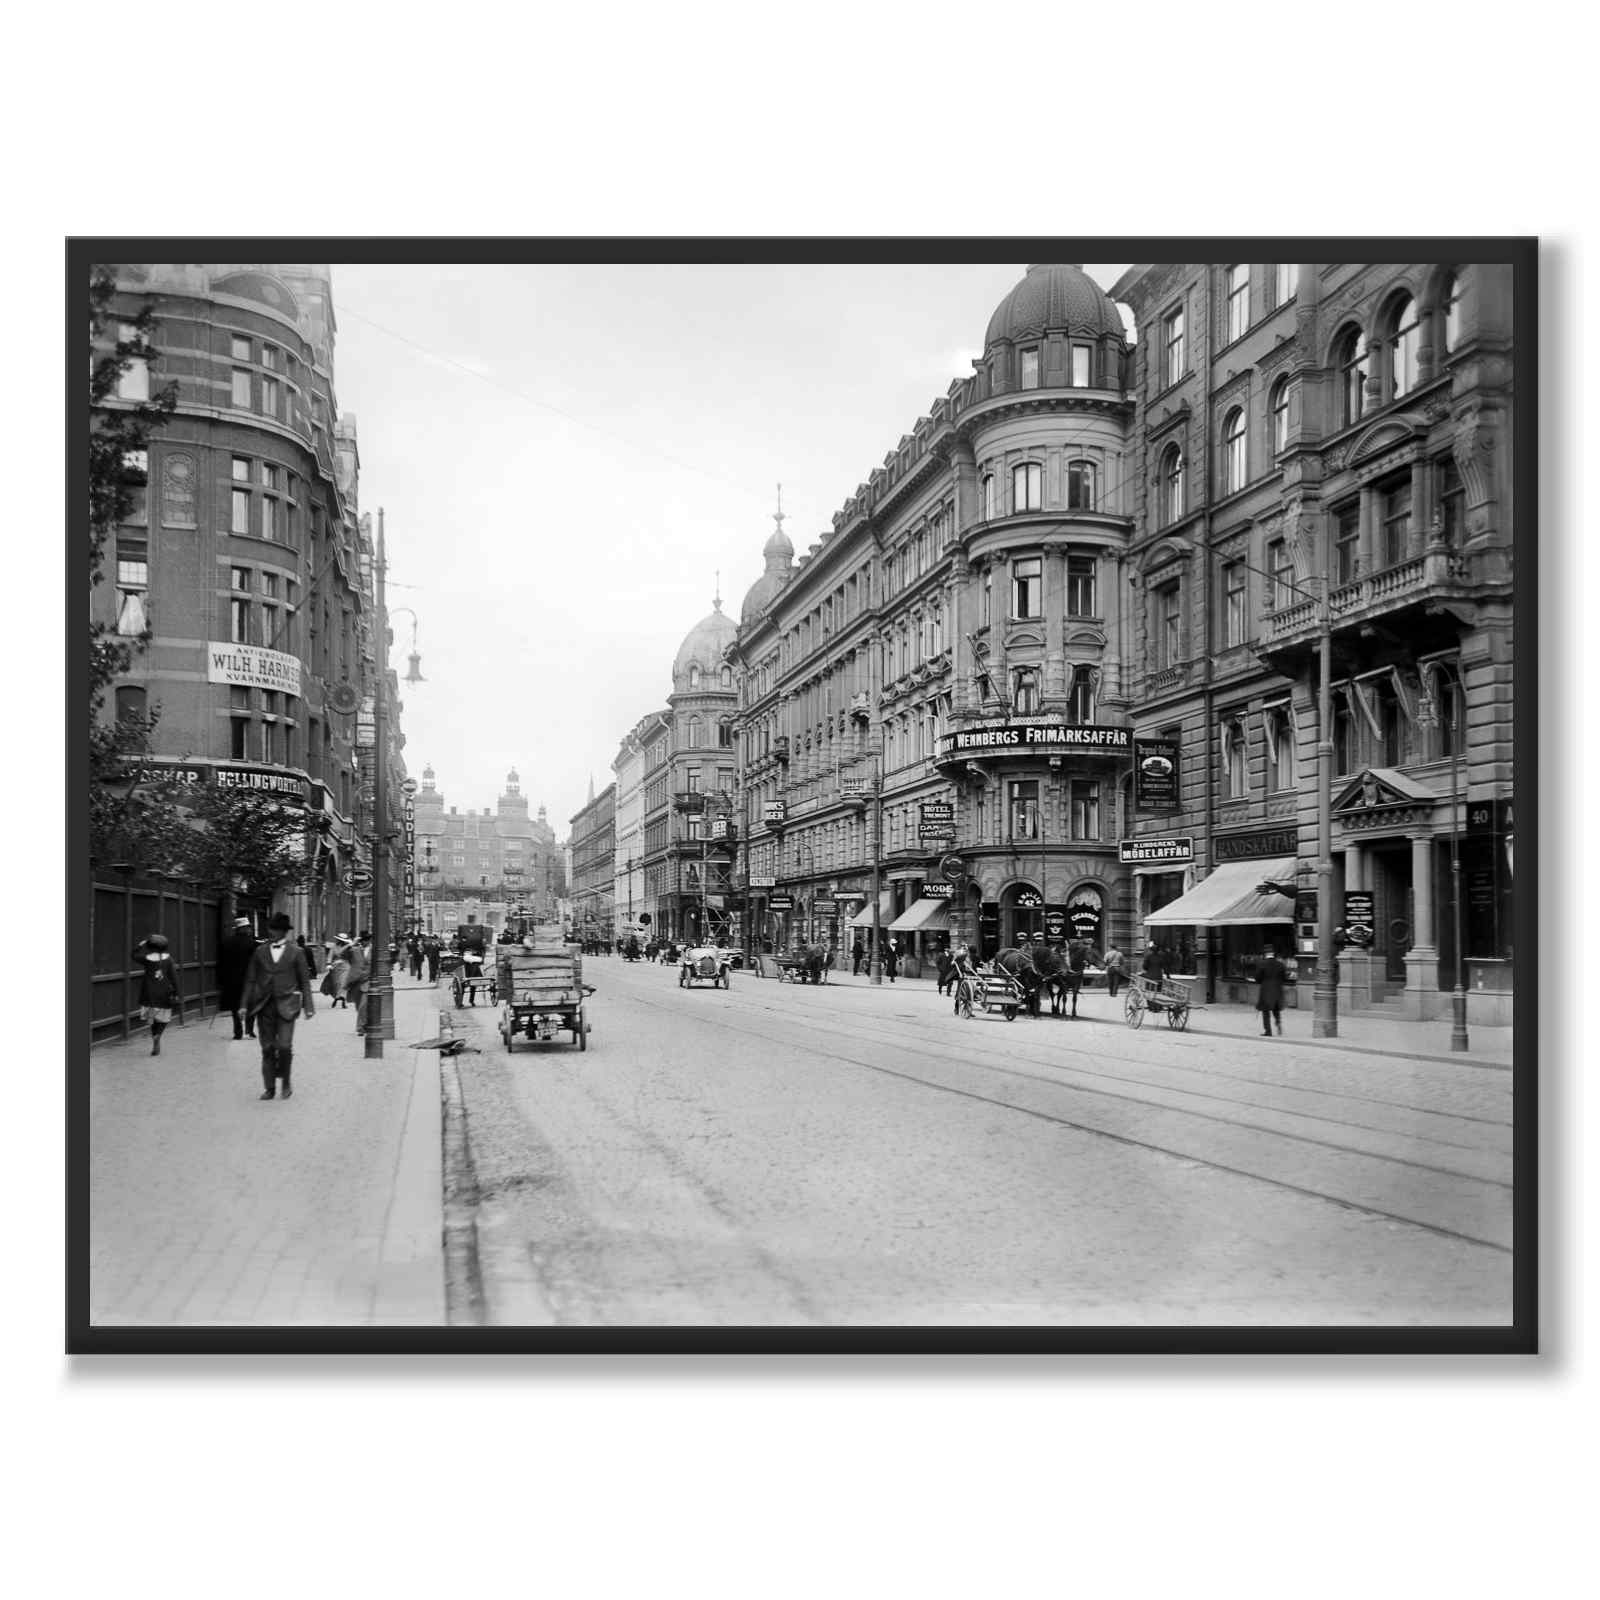 Vasagatan 1907